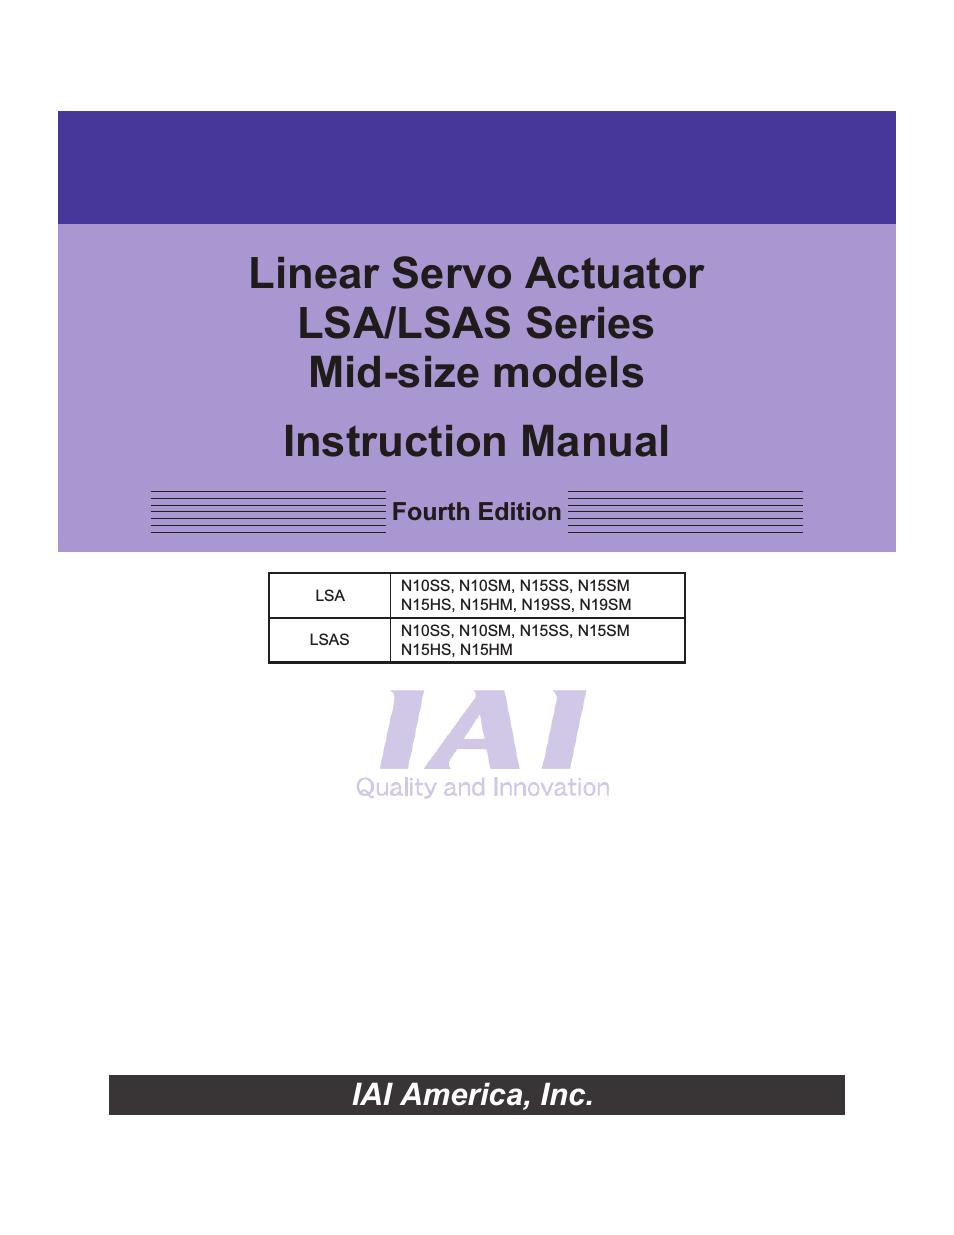 LSAS-N10SM